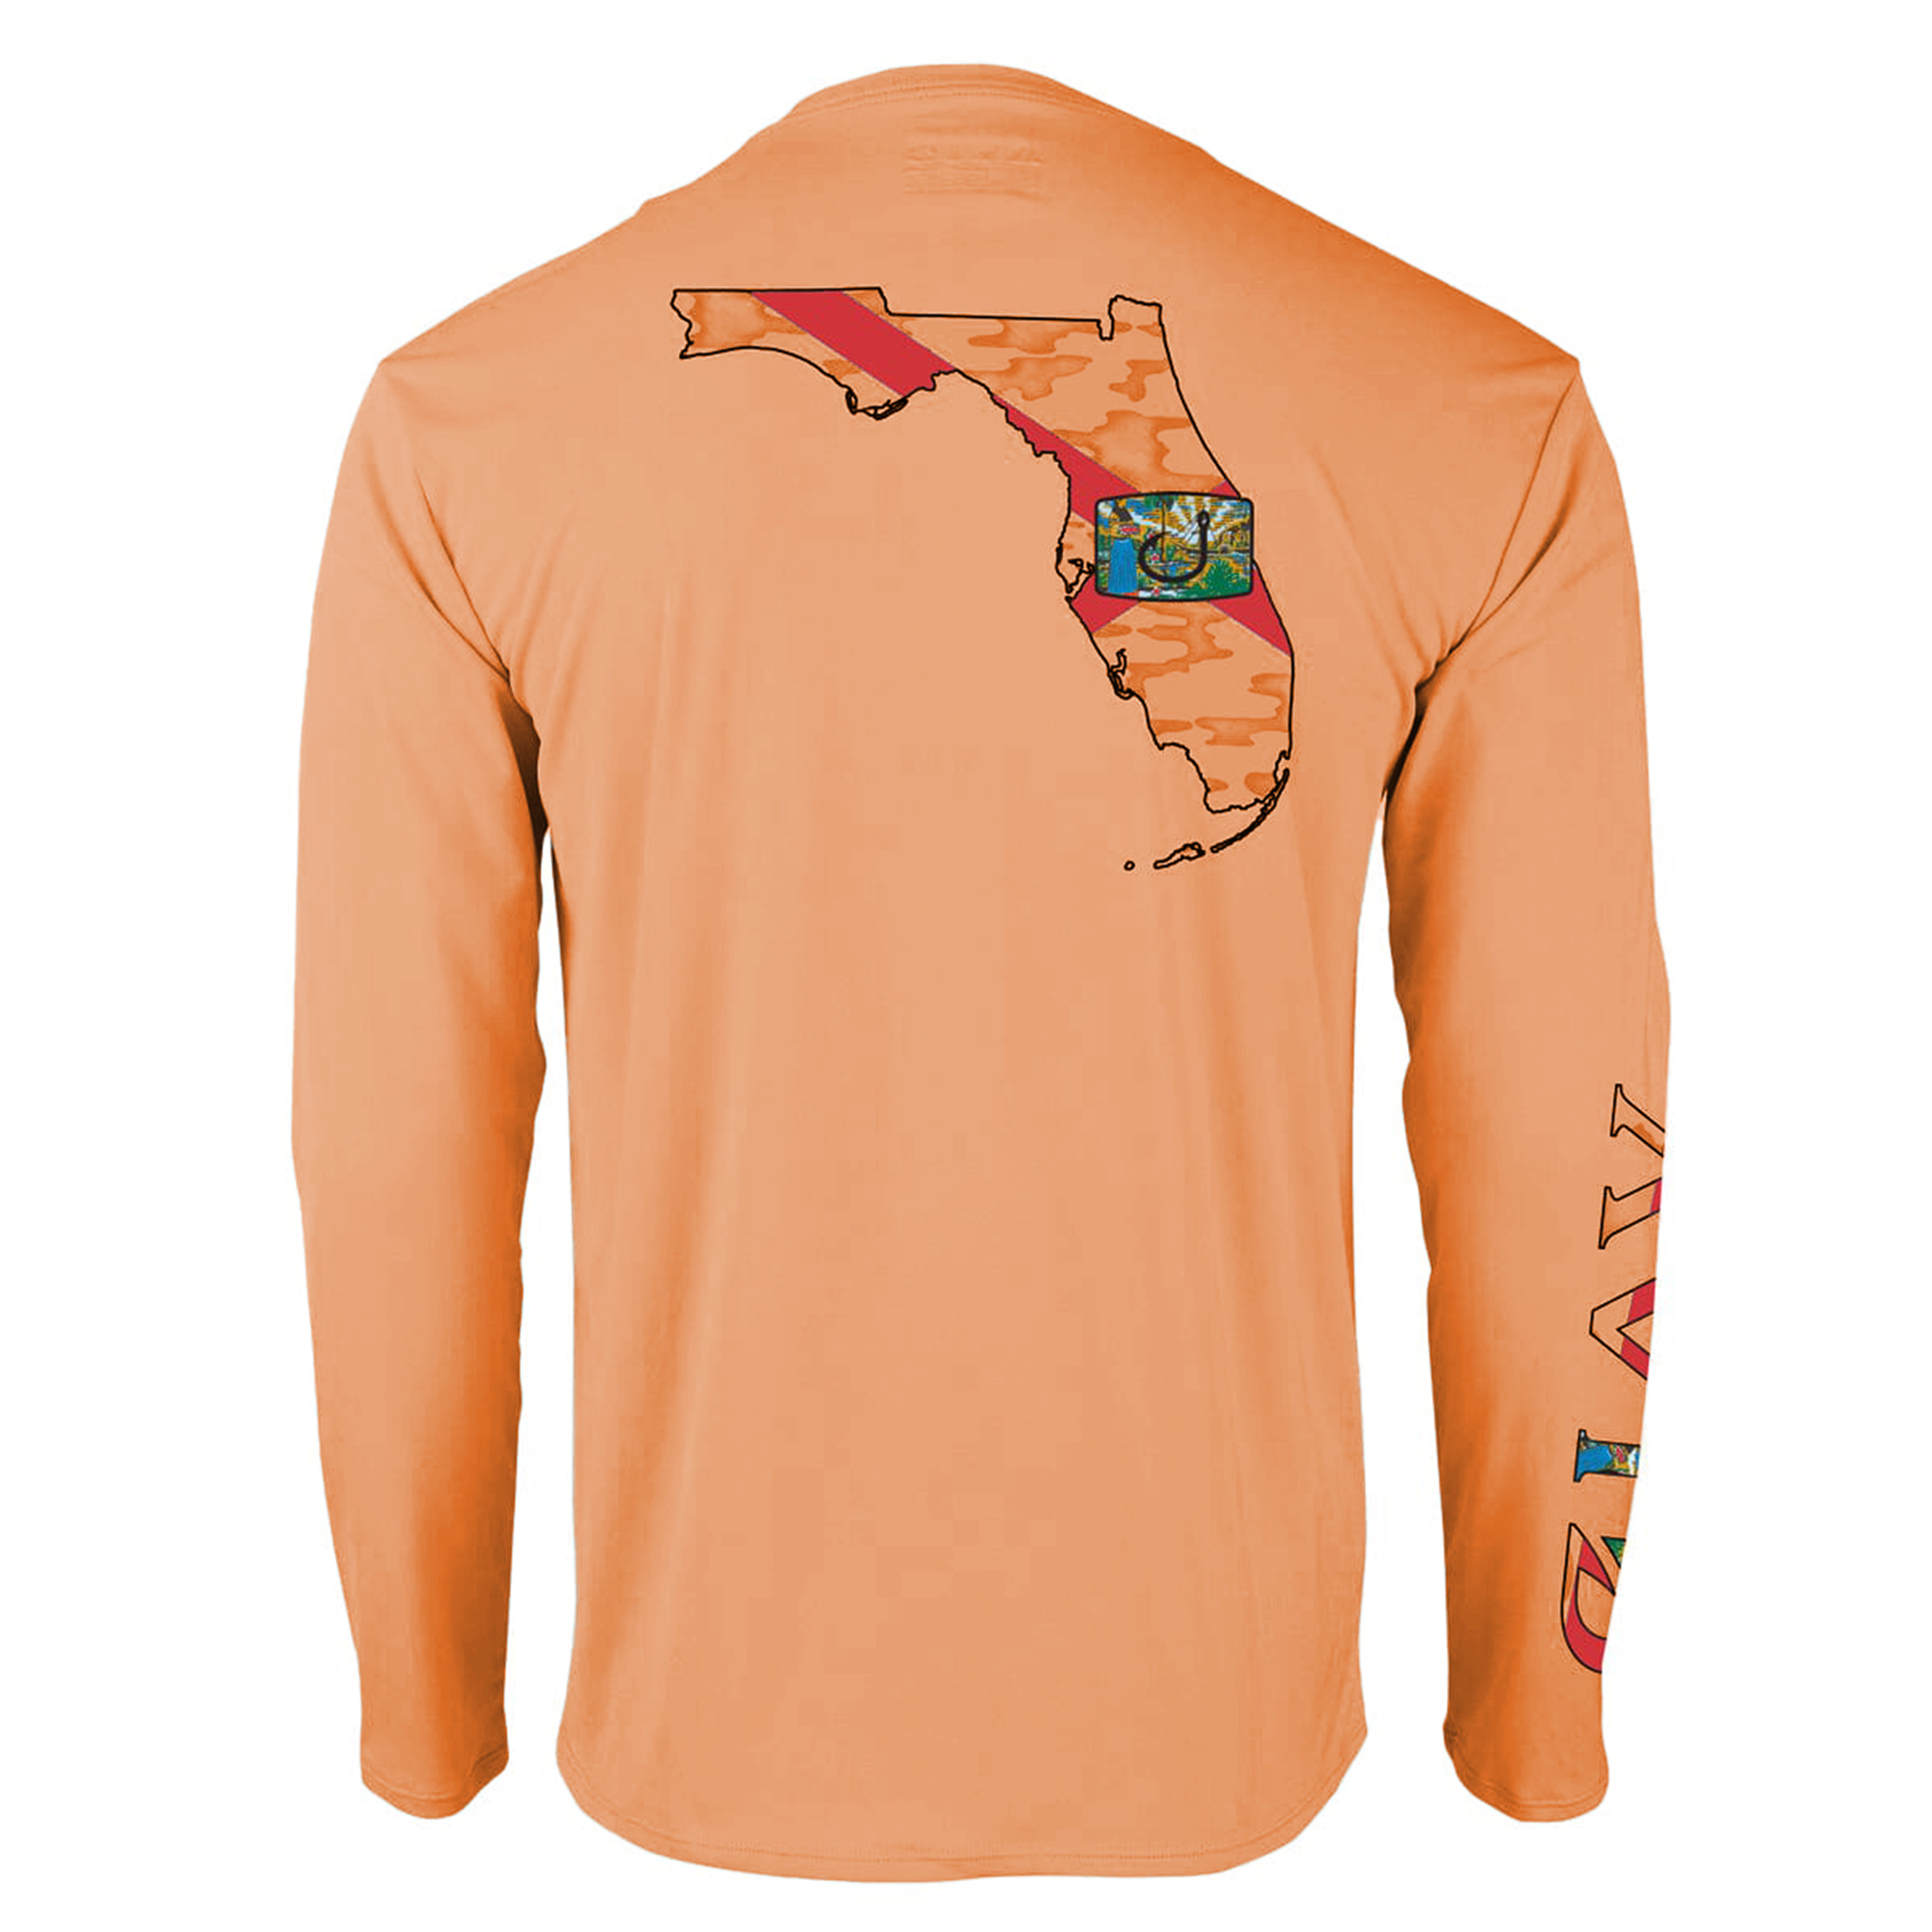 AVID Florida Native AVIDry Long Sleeve Performance Shirt (Men's) - Sunset Back